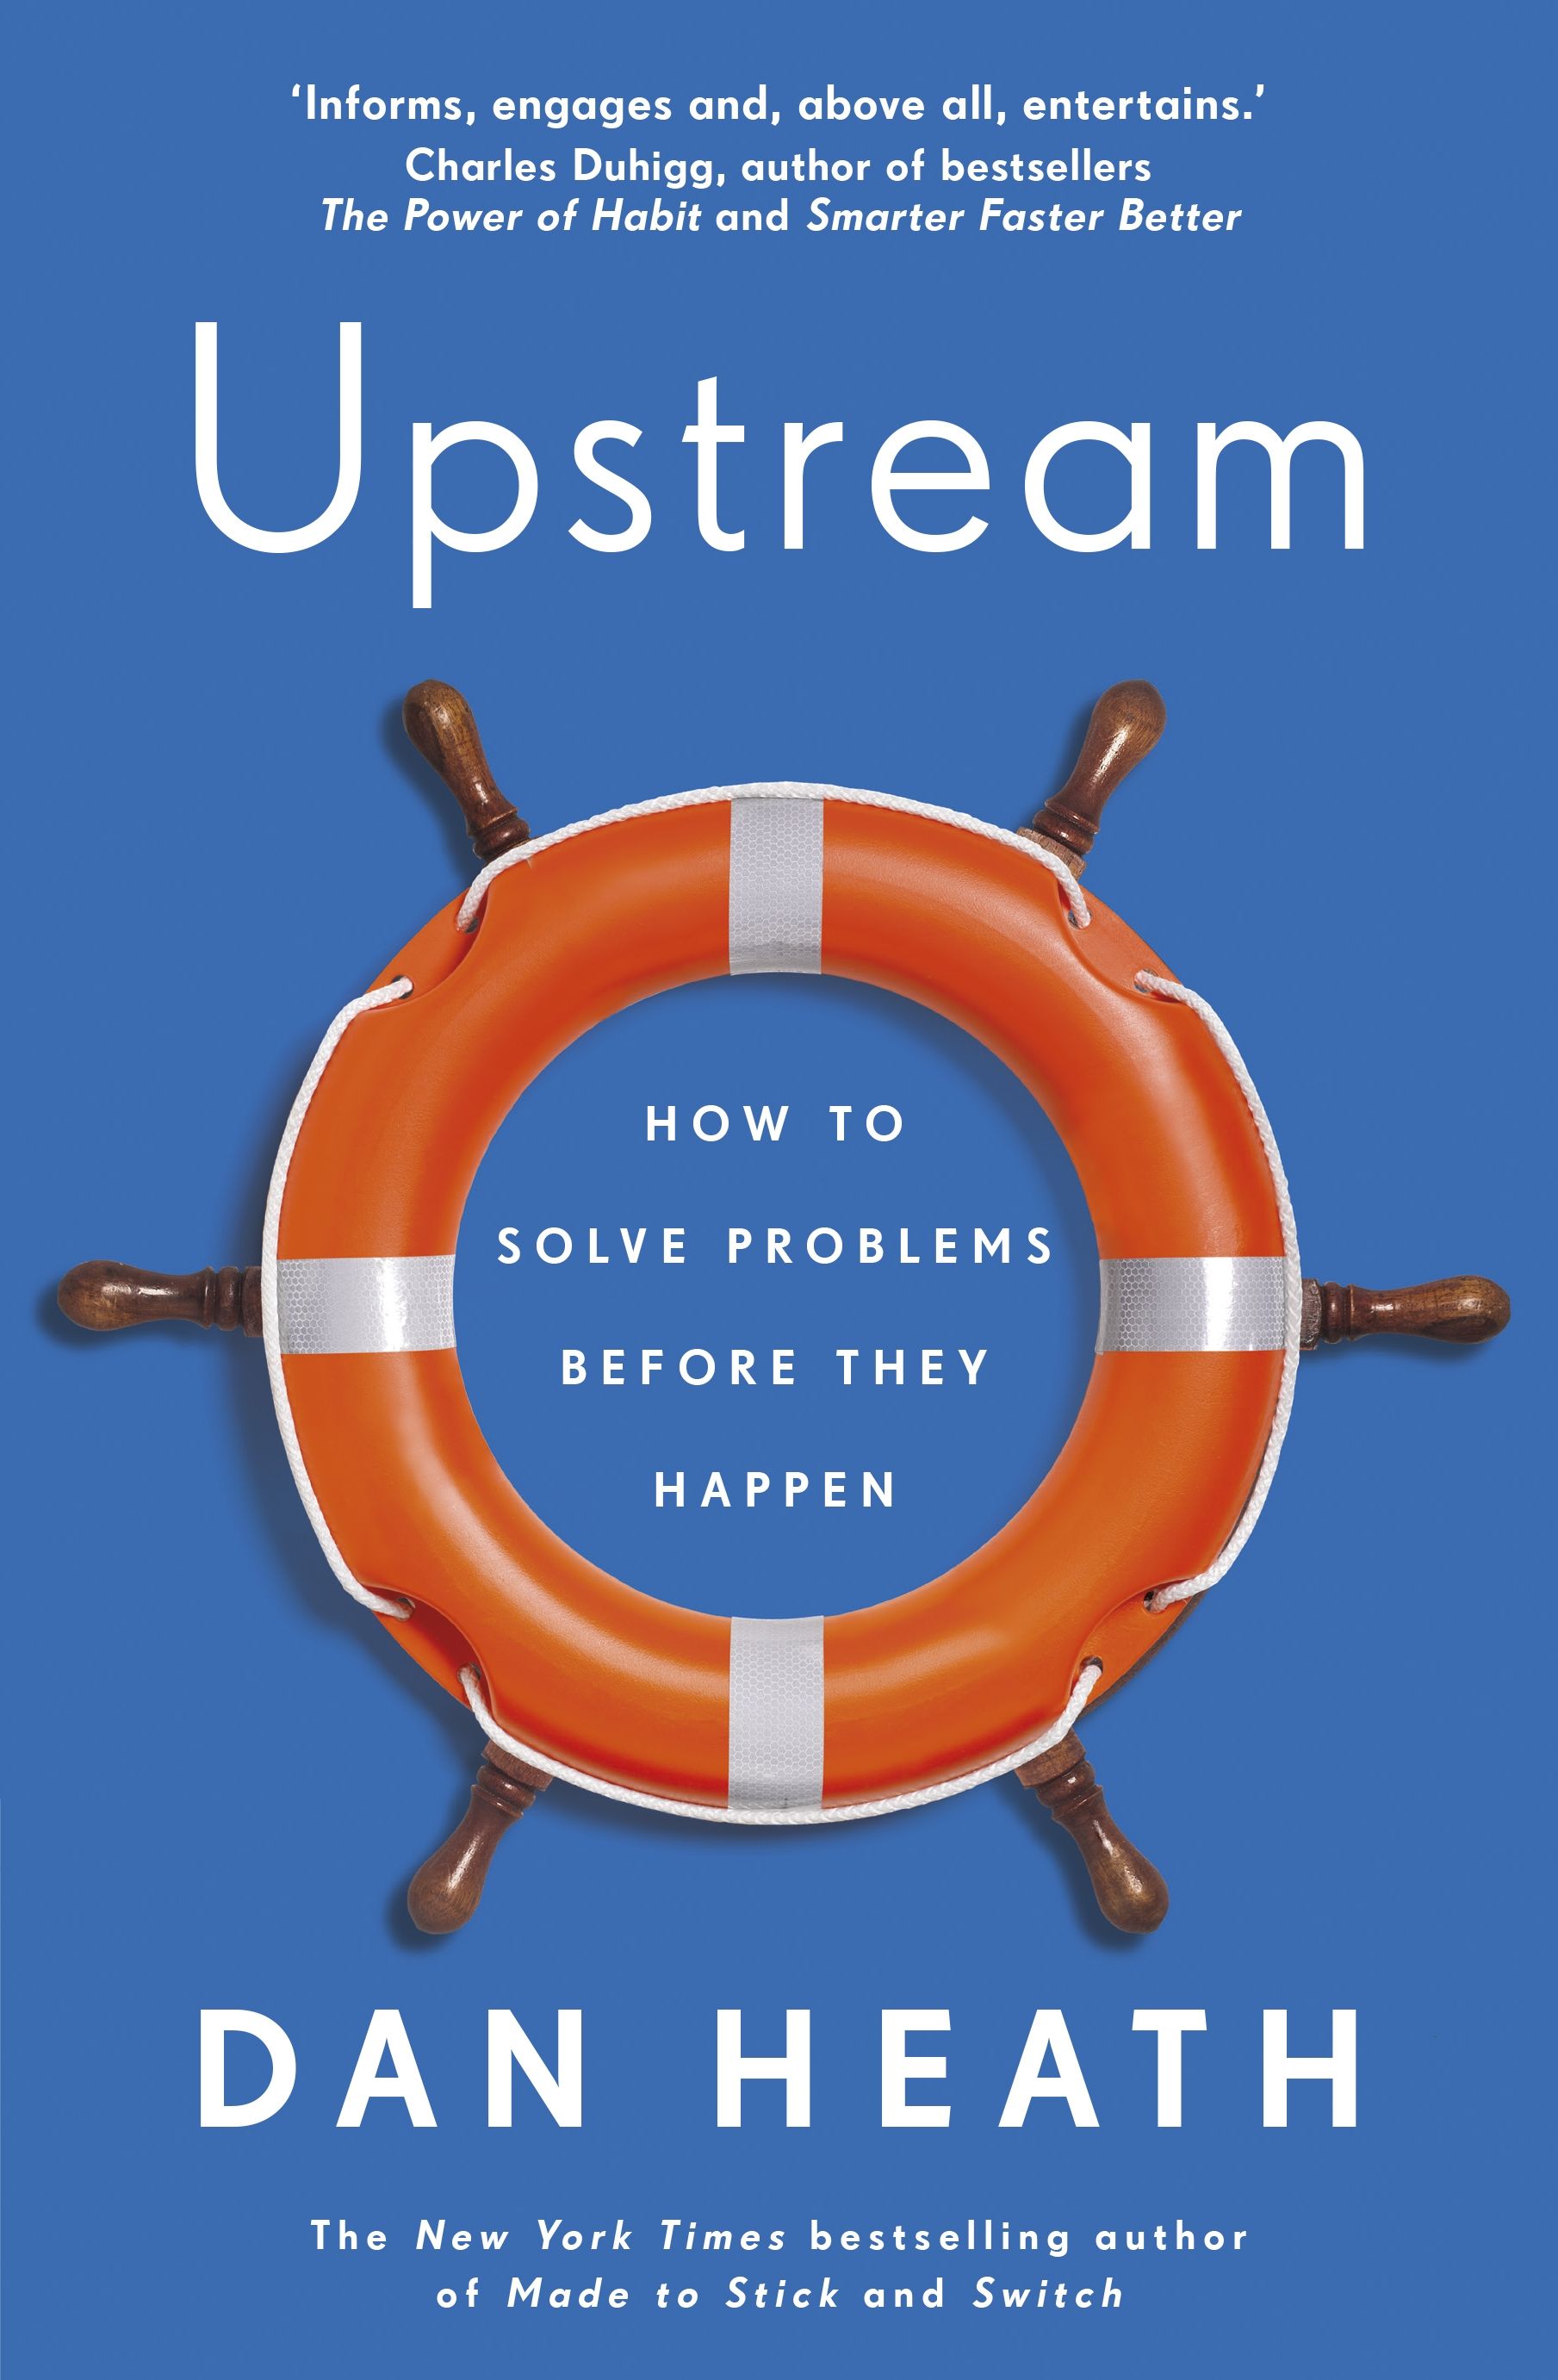 O happens. Upstream. Heath d. "upstream". Before problems.